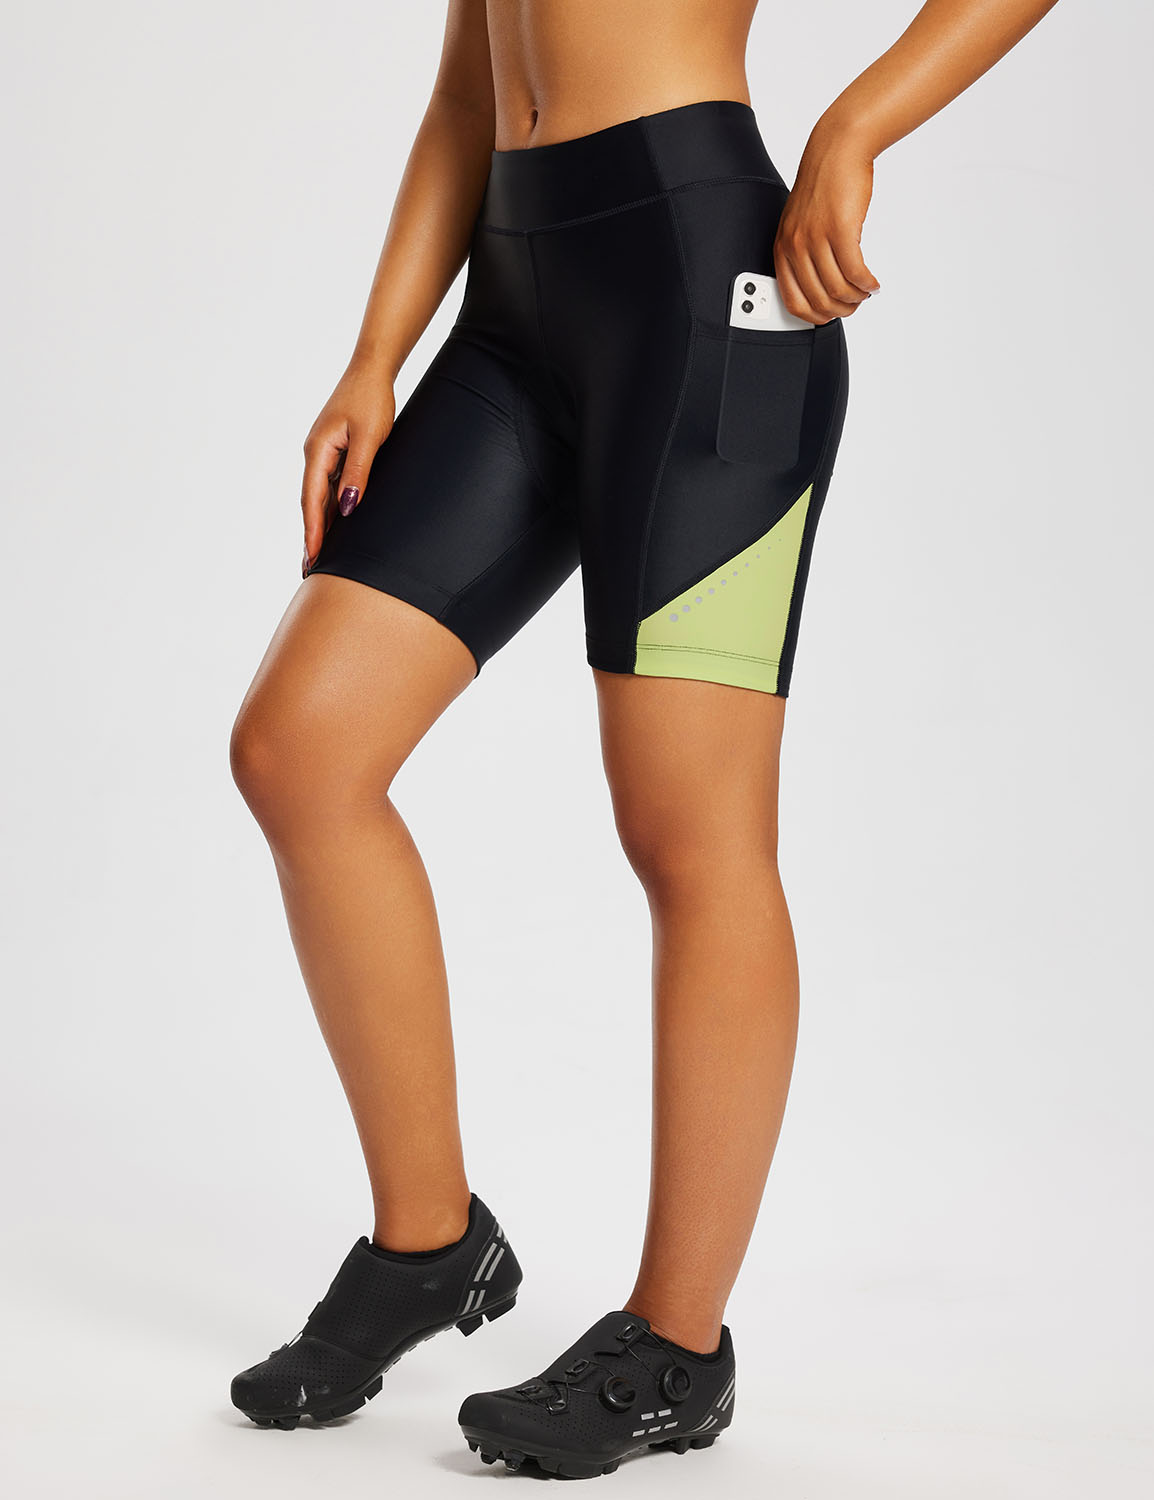 Baleaf Women's UPF50+ 4D Padded Cycling Shorts – Baleaf Sports